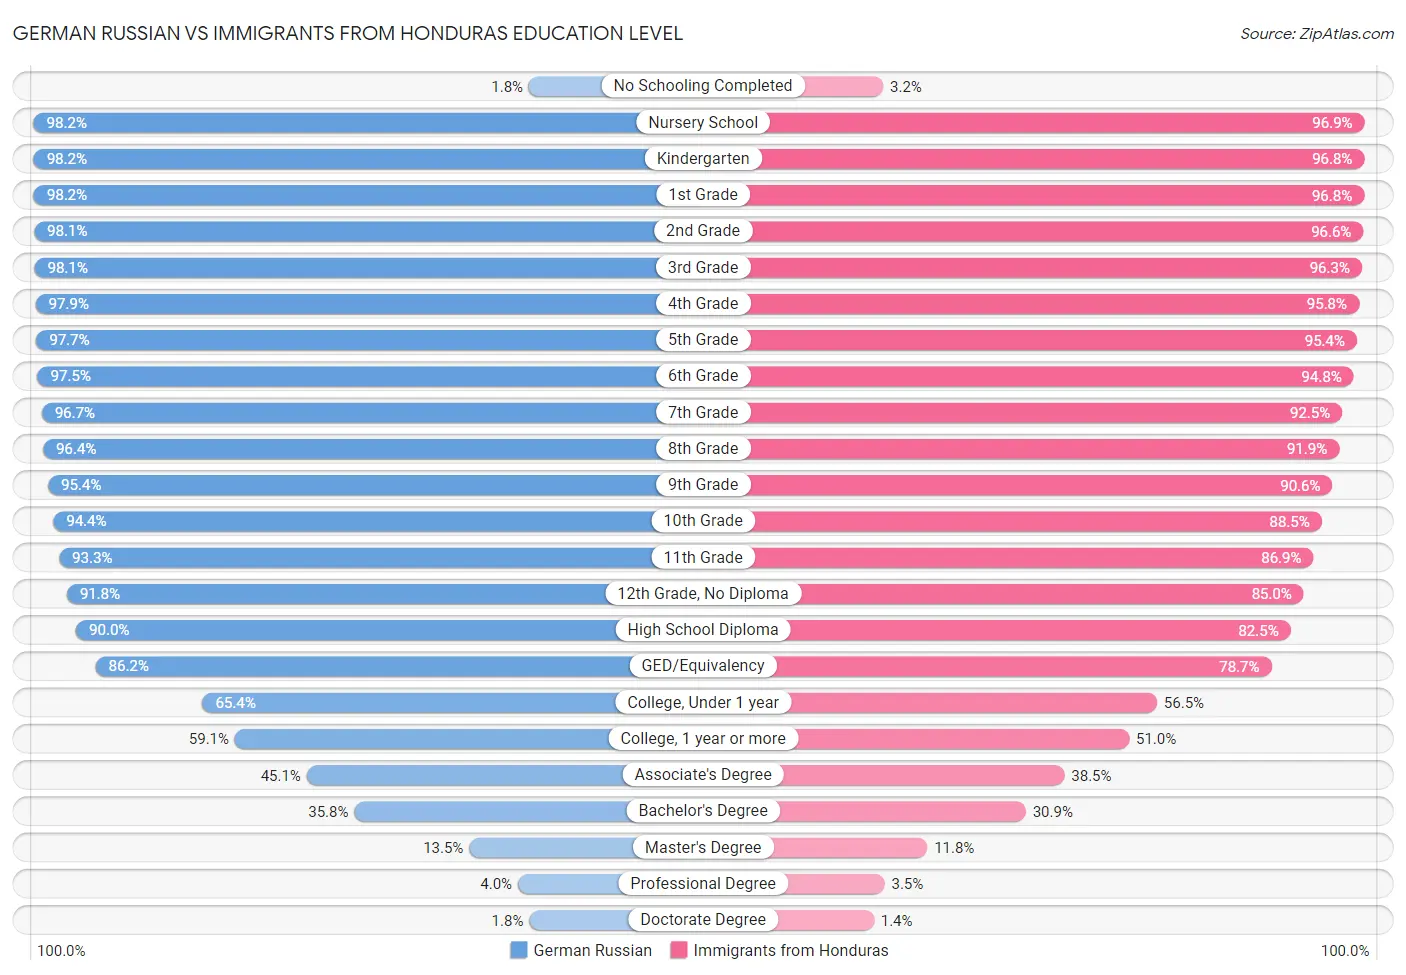 German Russian vs Immigrants from Honduras Education Level